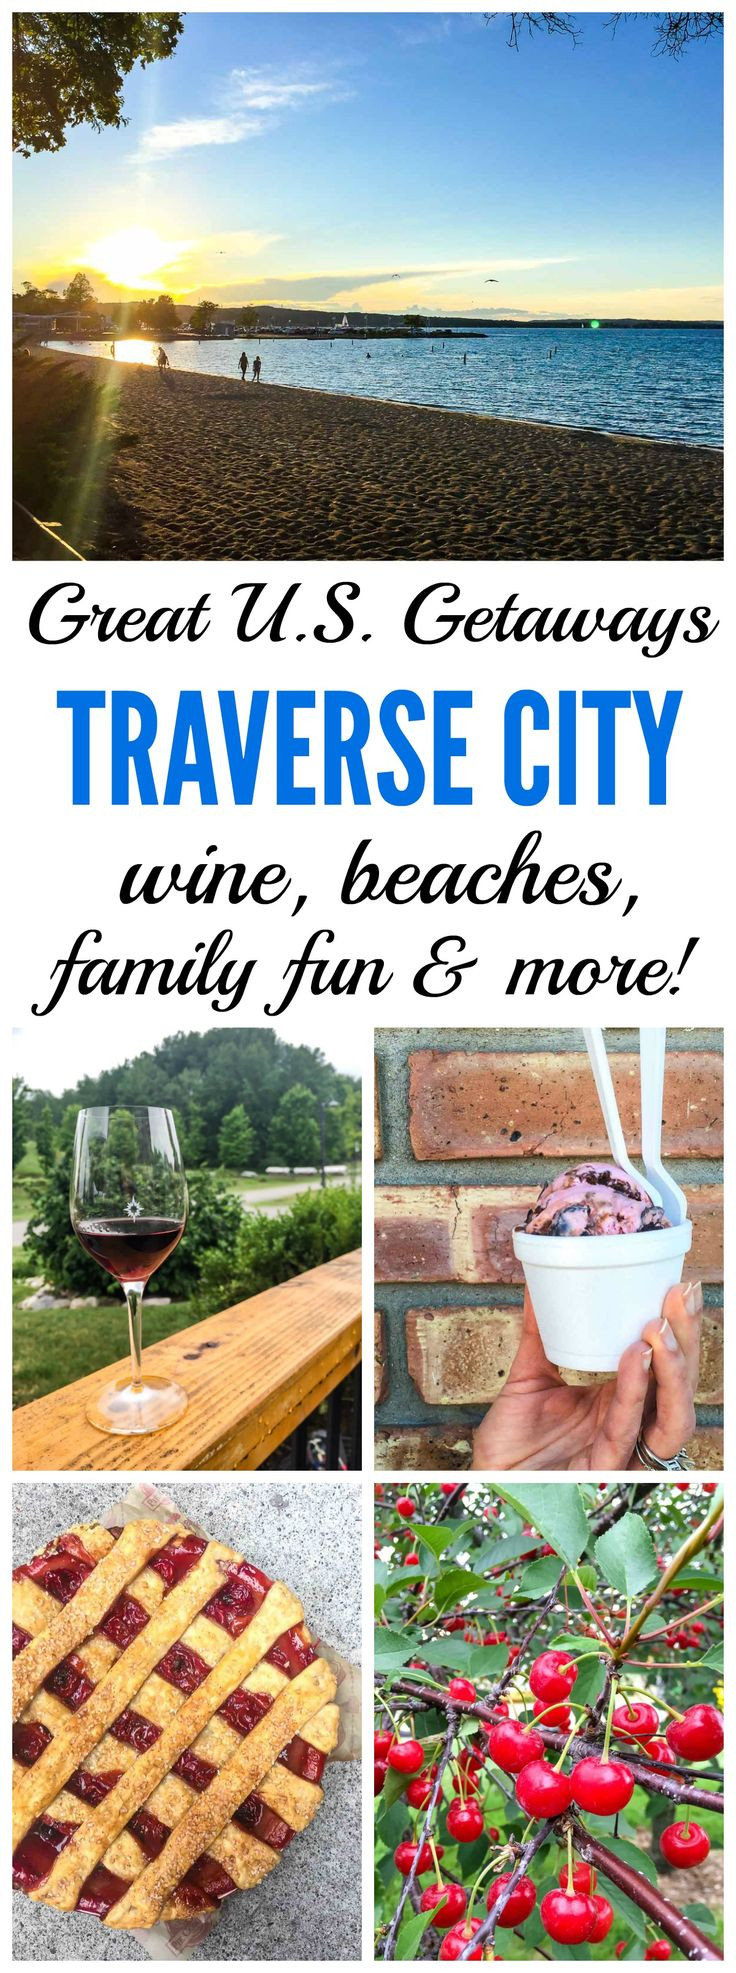 Traverse City Bachelorette Party Ideas
 164 best images about Travel Places to Visit on